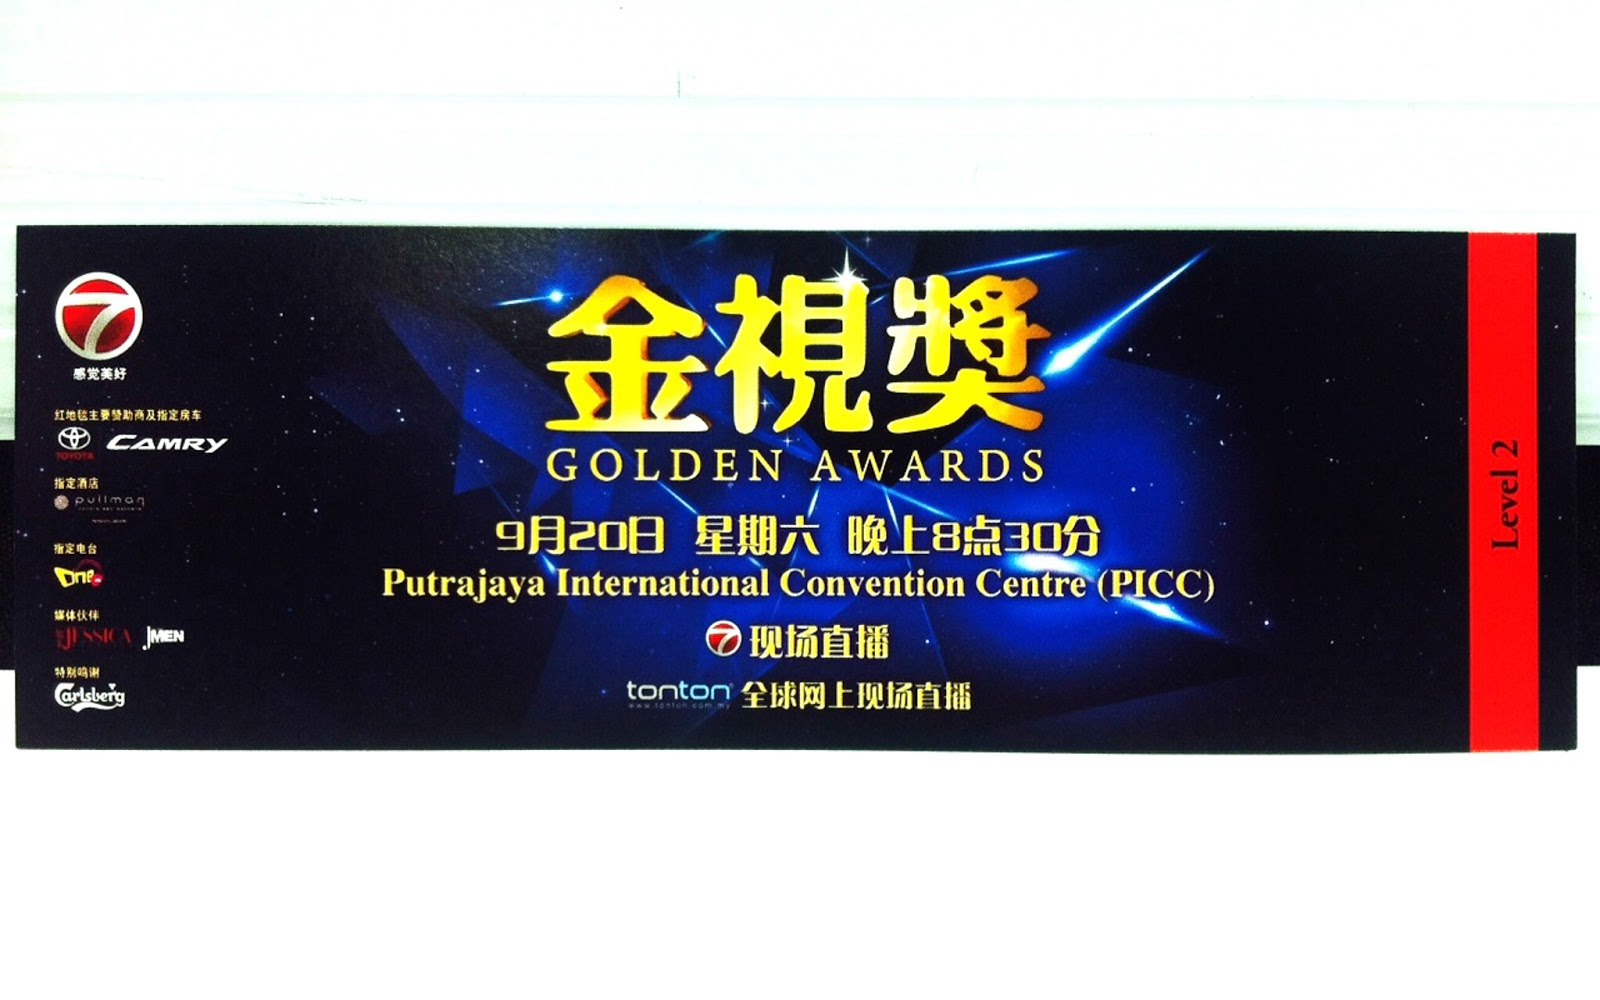 ntv7 Golden Awards 2014 @ Putrajaya International Convention Contre (PICC) 9月20日 星期六 晚上8点30分